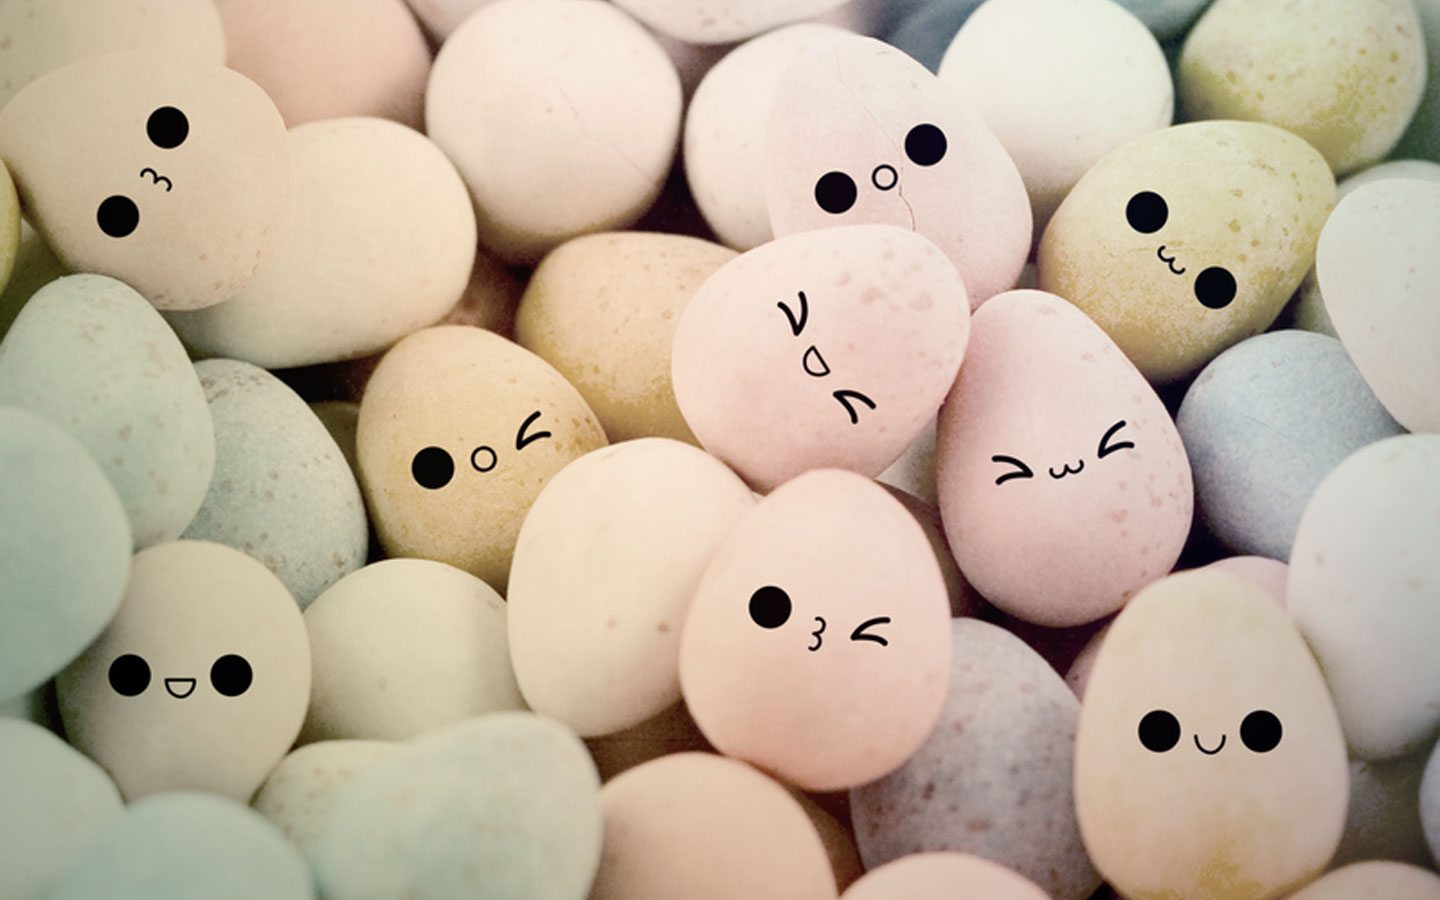 Cute Eggs With Faces Desktop Wallpaper 1440x900